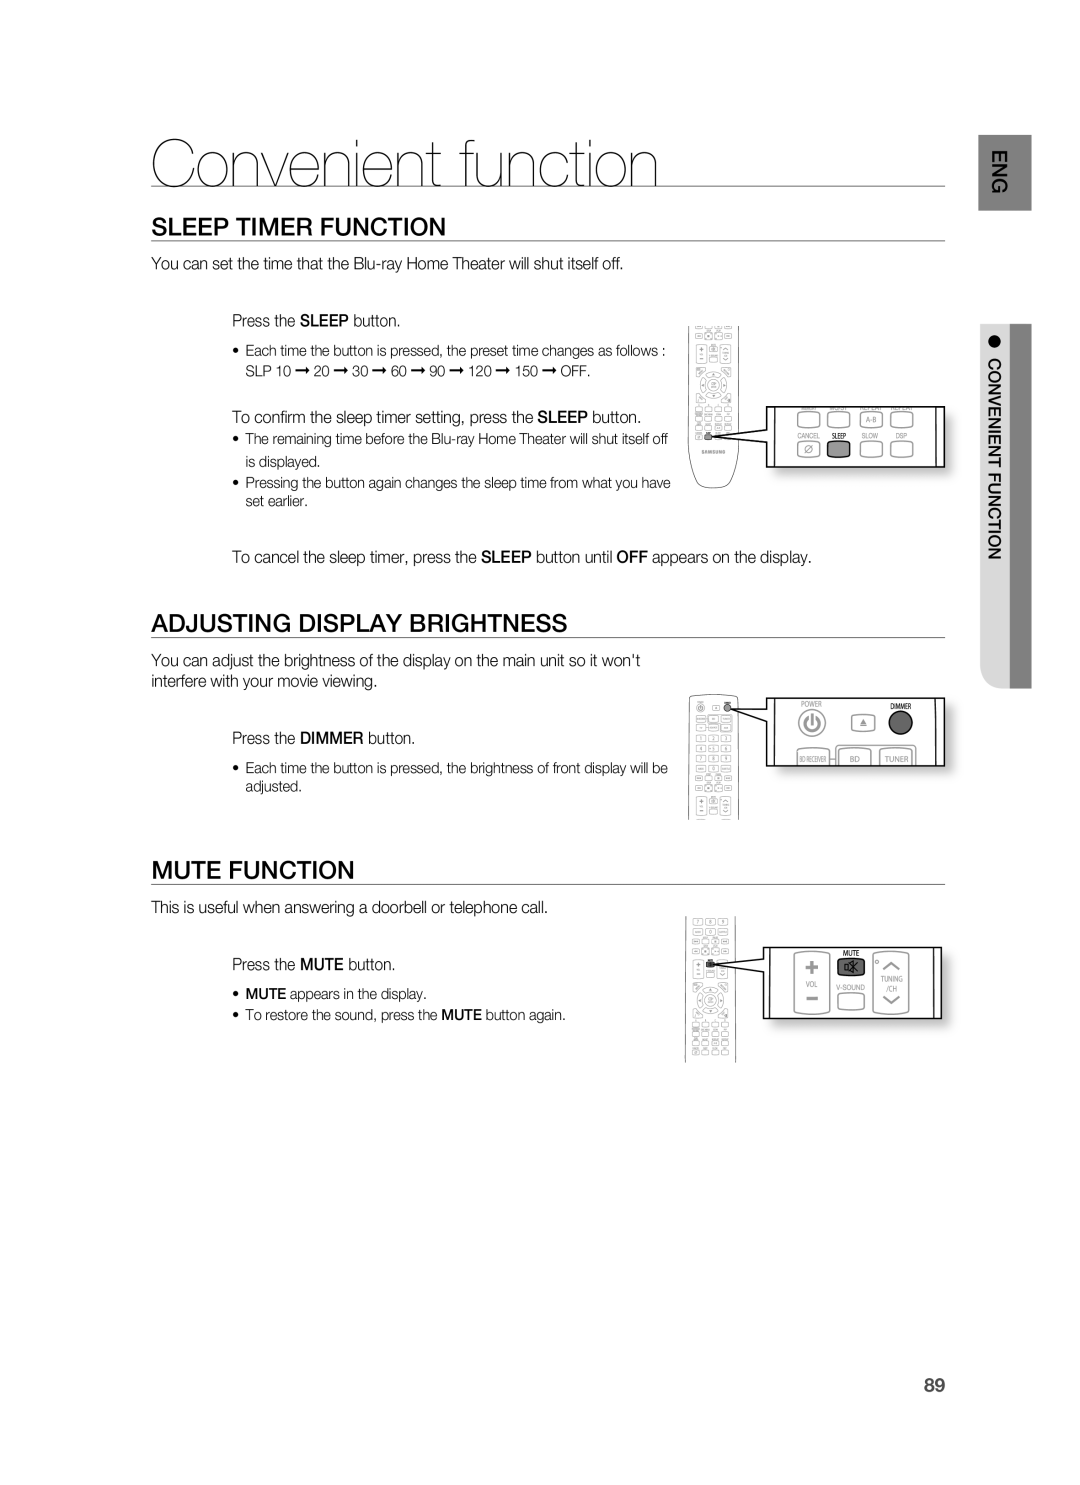 Samsung HT-BD8200 user manual Convenient function, Sleep Timer Function, Adjusting Display Brightness, Mute Function 